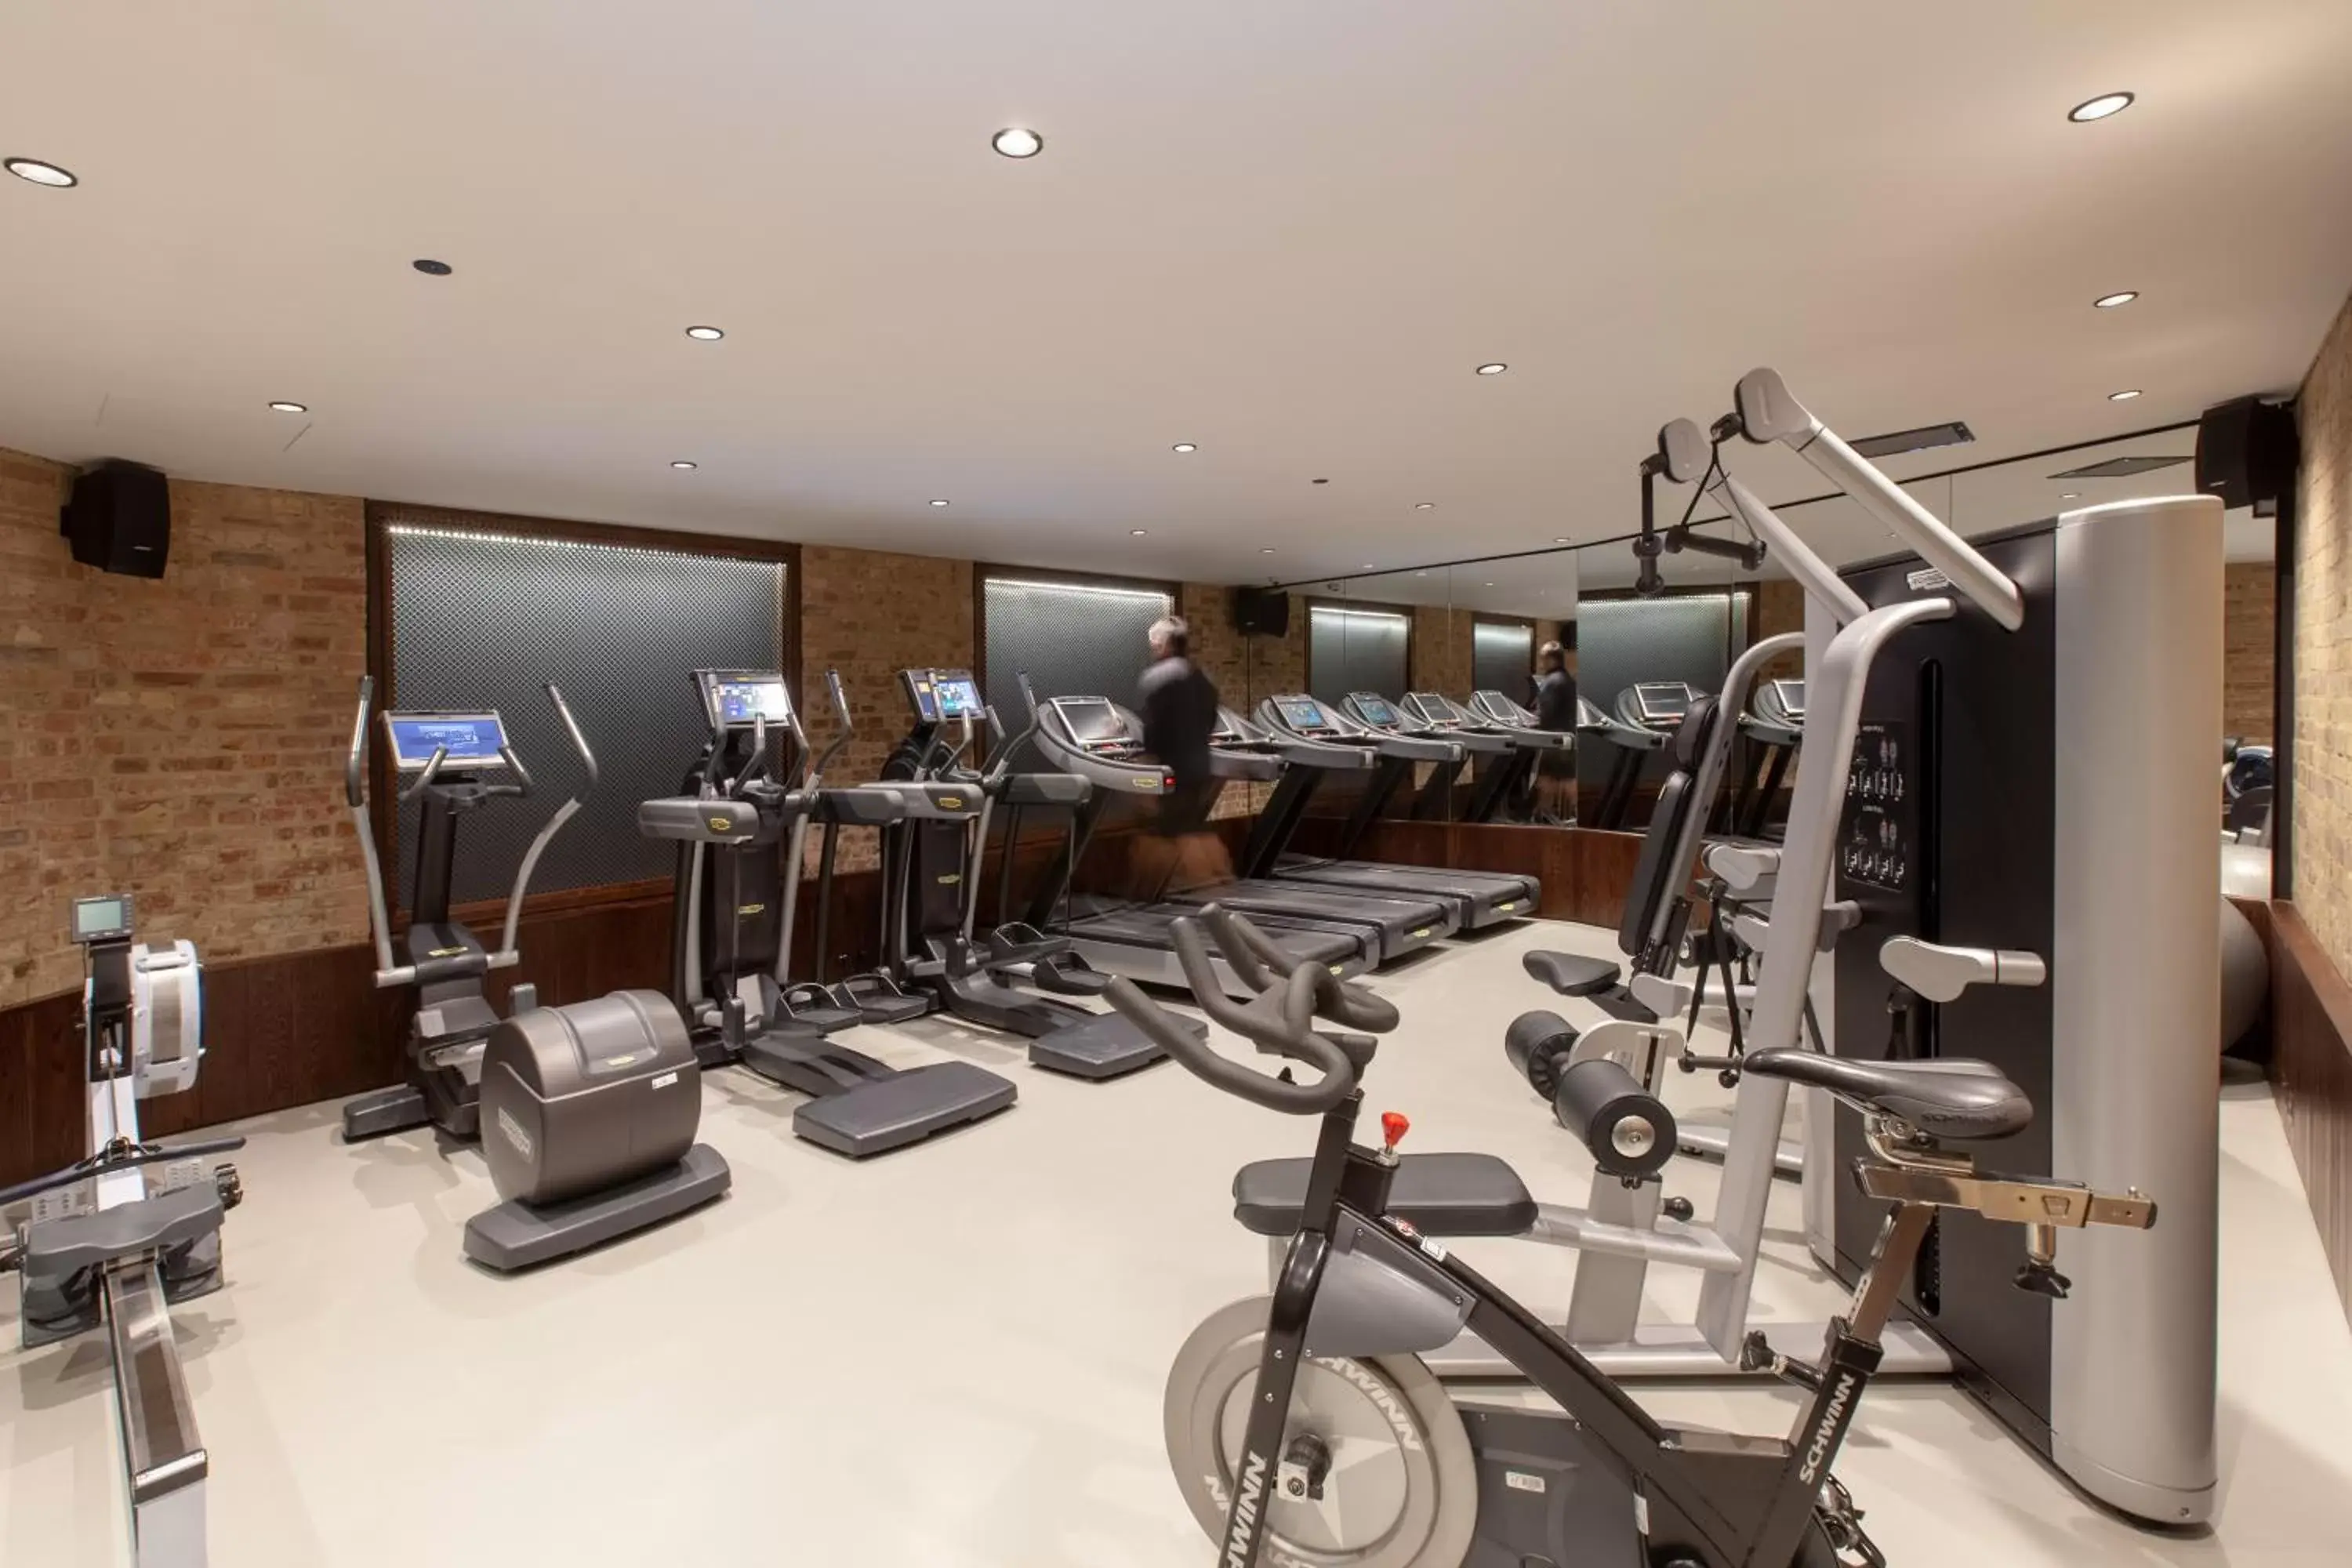 Fitness centre/facilities, Fitness Center/Facilities in St. James' Court, A Taj Hotel, London